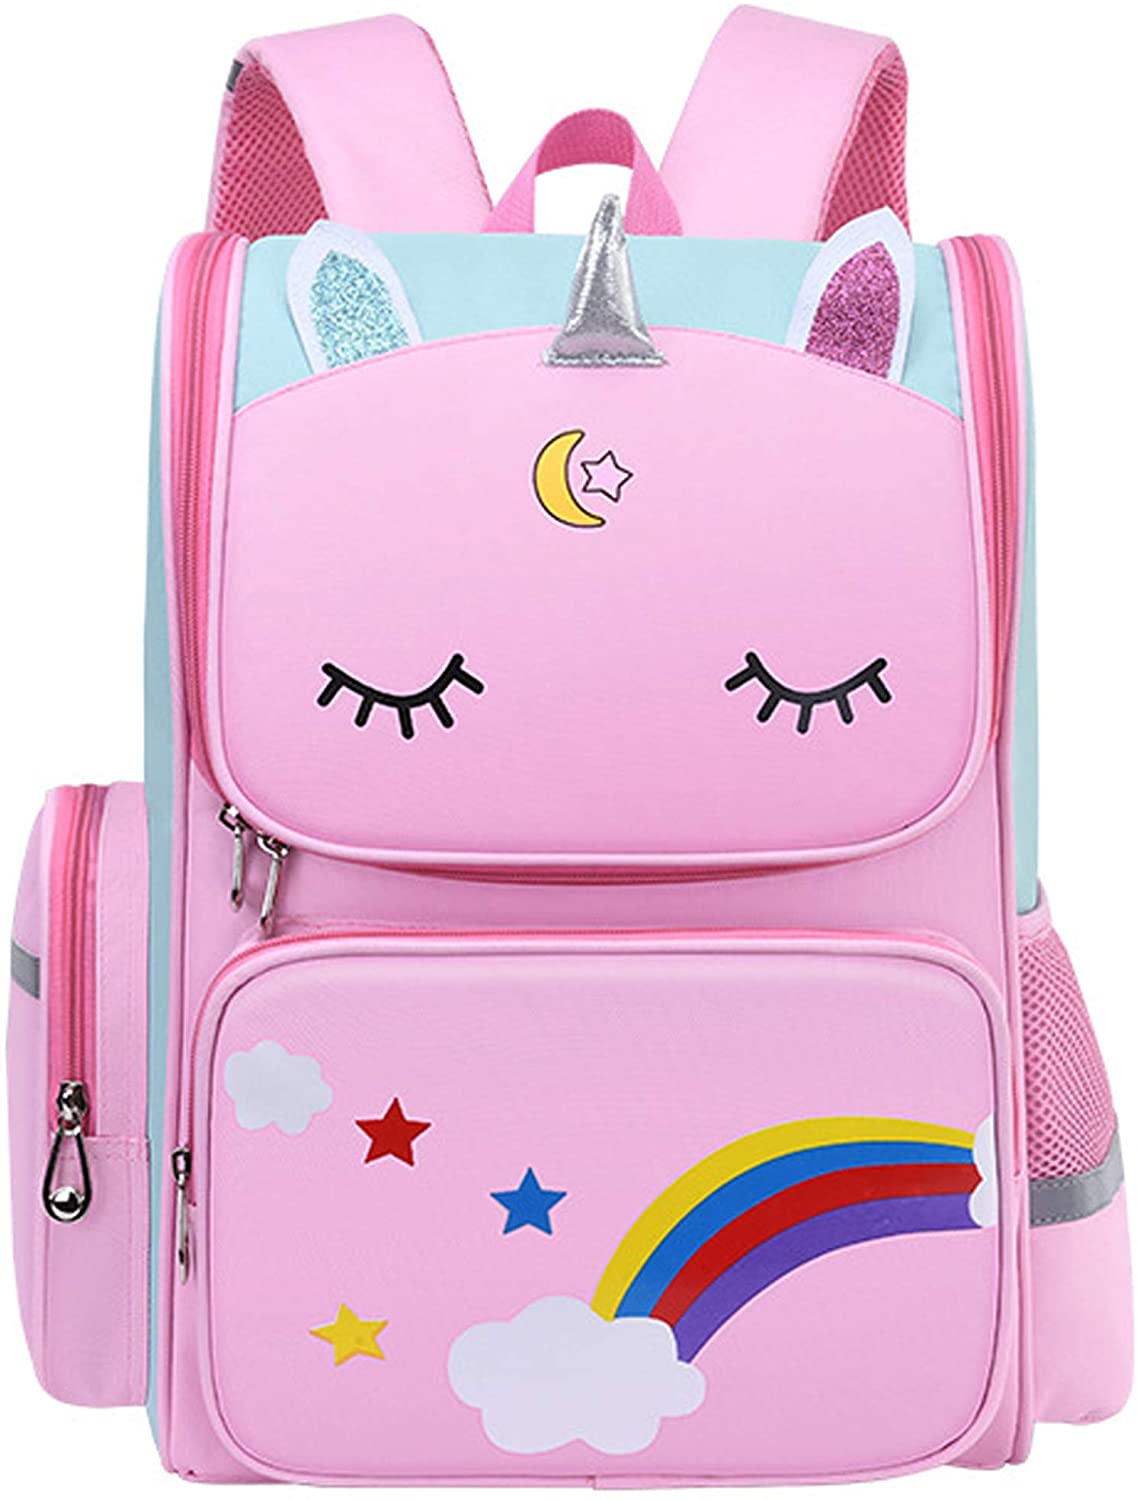 backpacks-for-women-latest-college-school-bags-for-girls -small-backpacks-women-kids-girls-fashion-bag